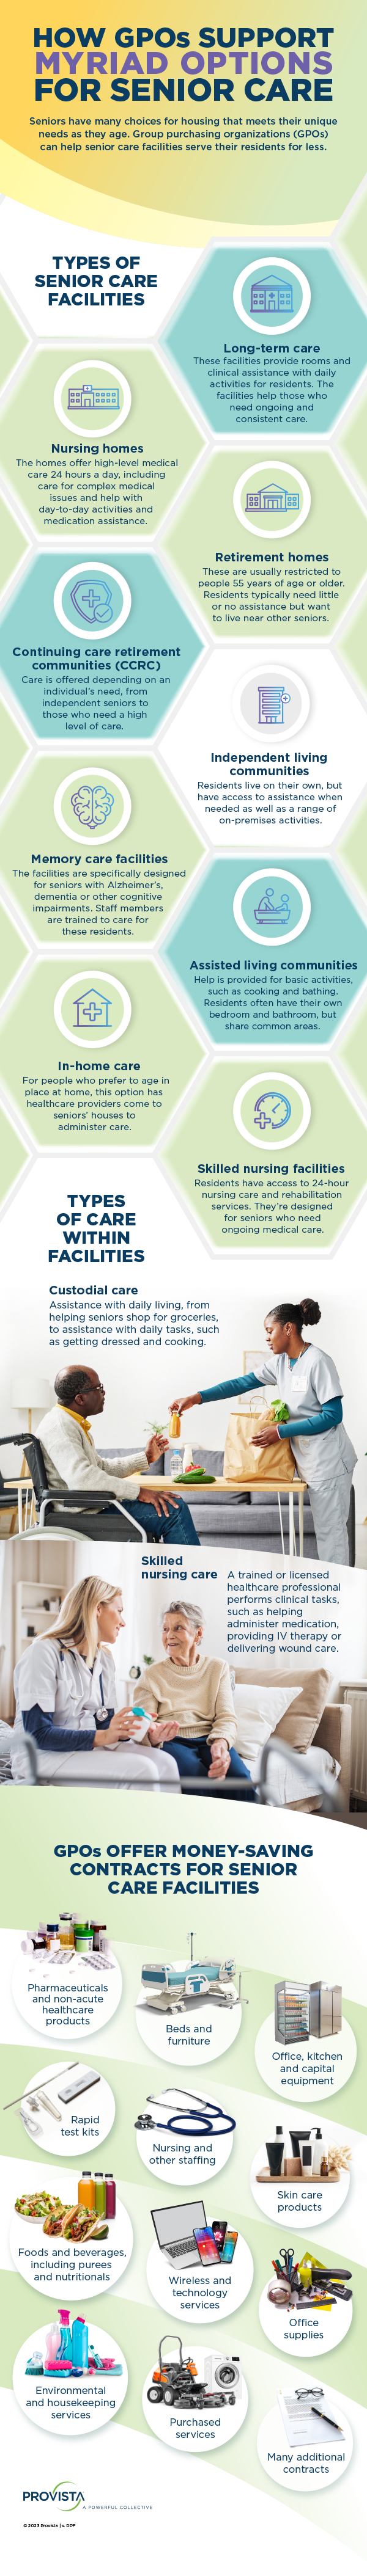 Infographic for senior living care